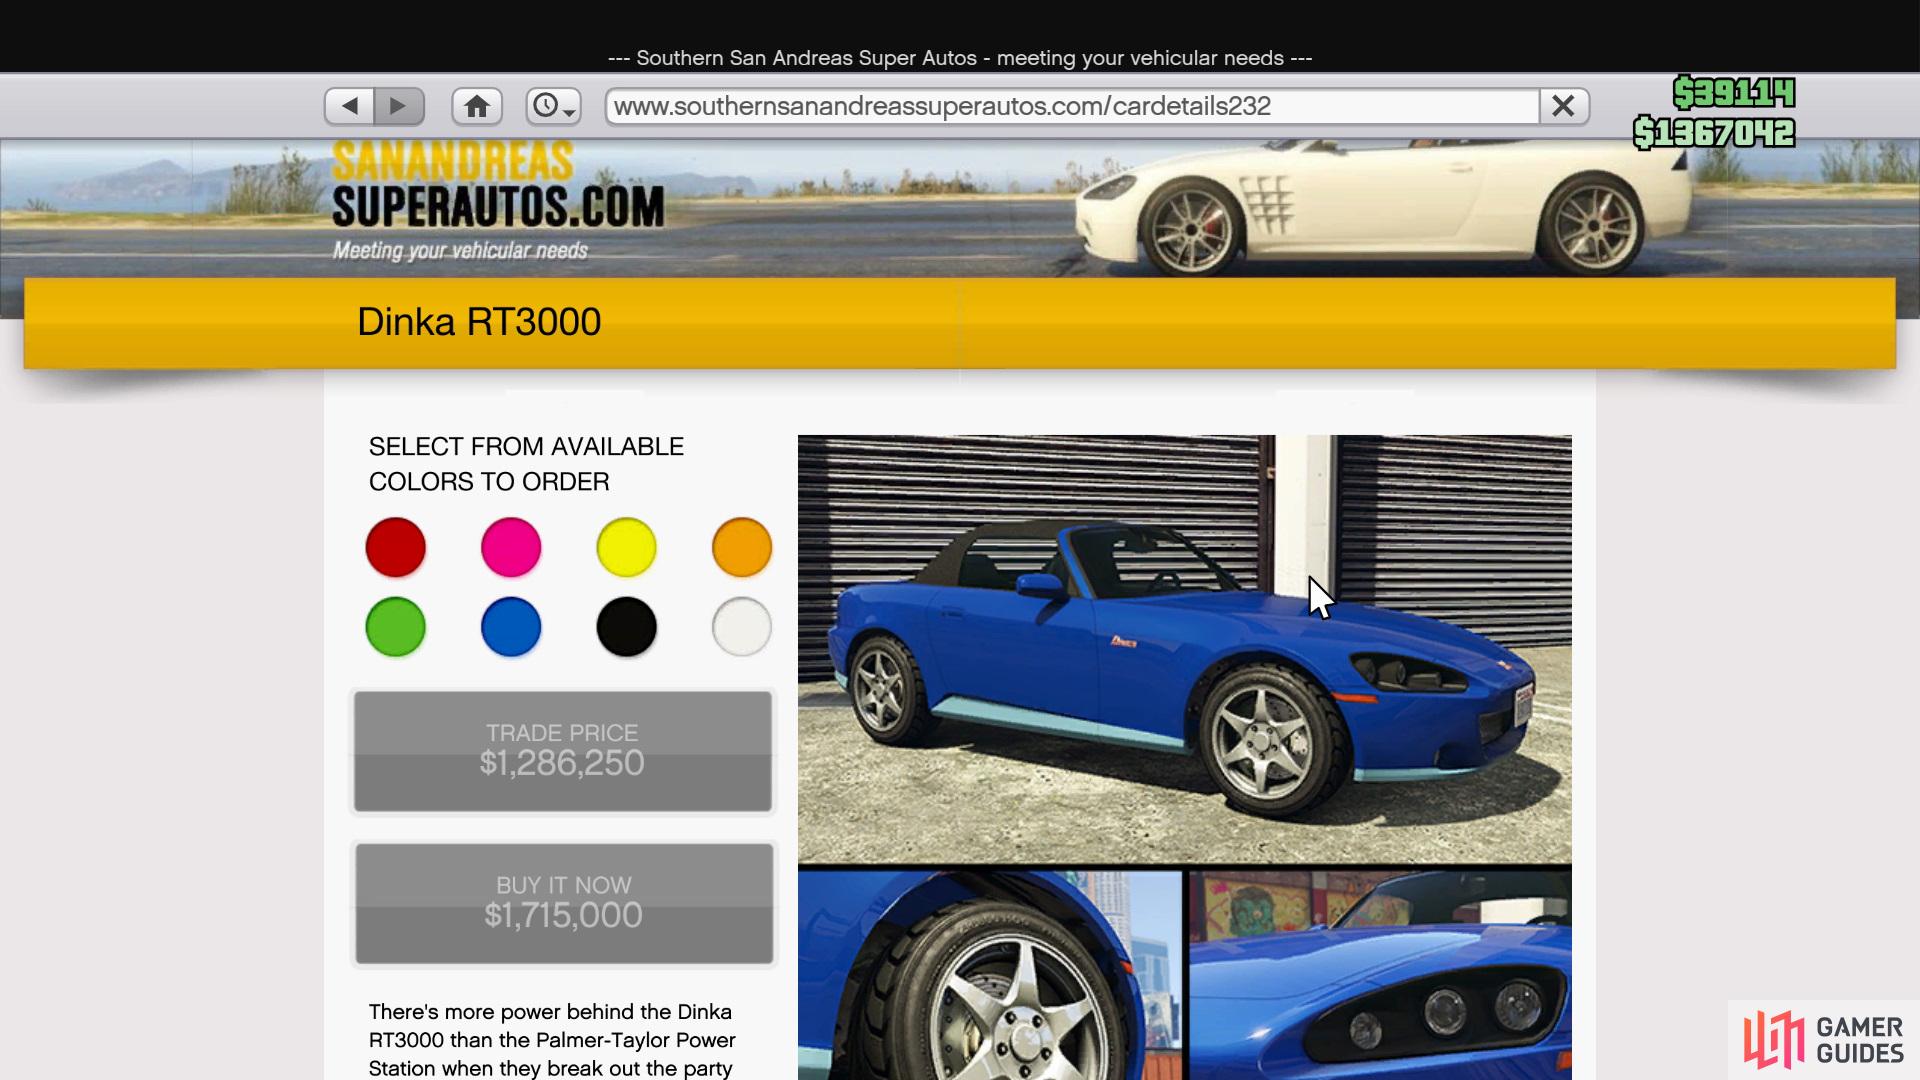 GTA Online Los Santos Tuners New Cars Prices